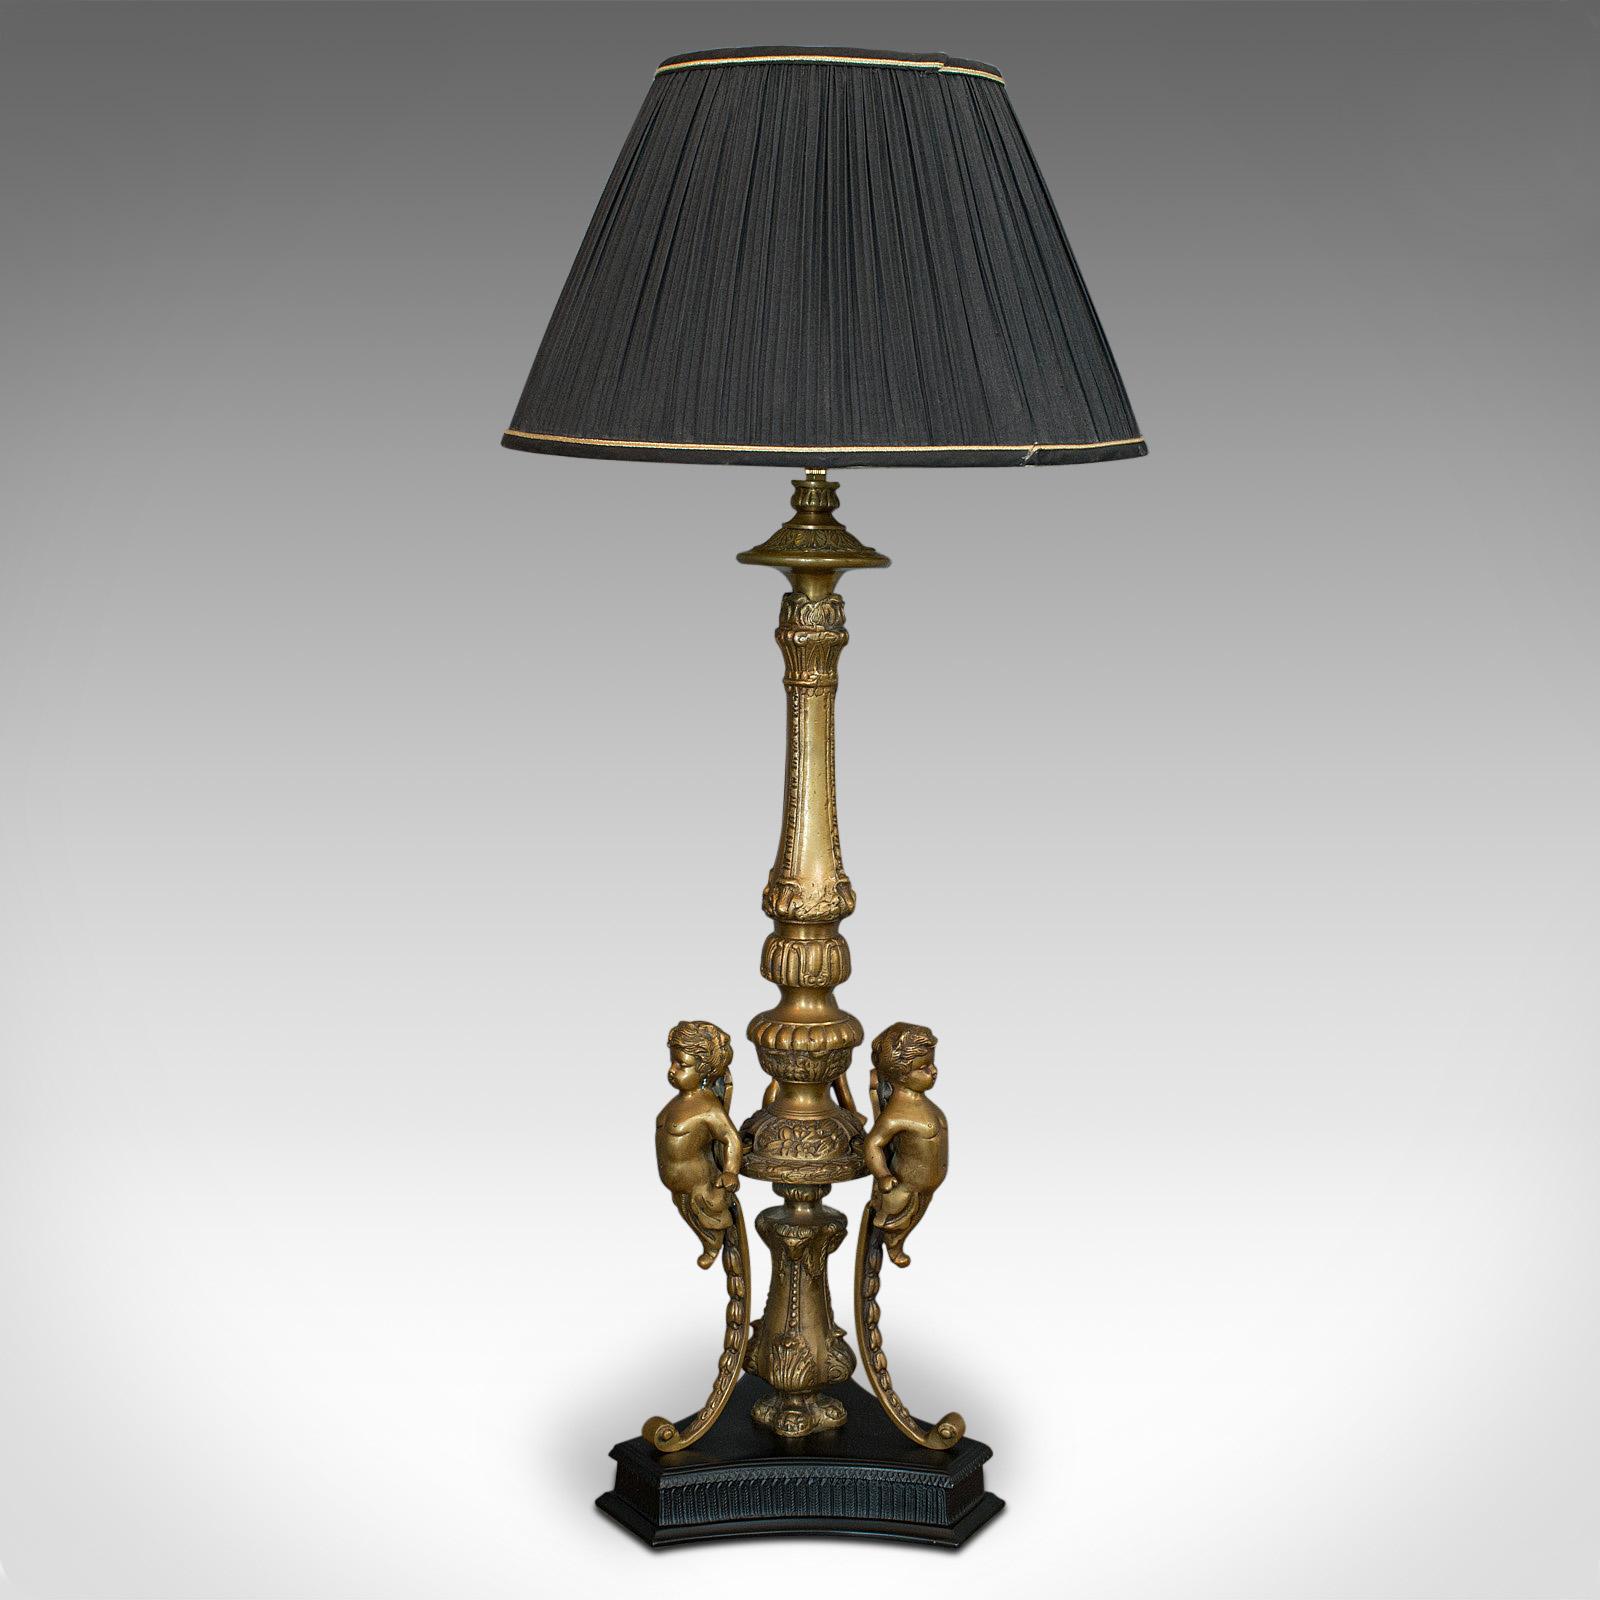 Victorian Vintage Table Top Lamp, Gilt Metal, Cherubic Light, 20th Century, circa 1990 For Sale